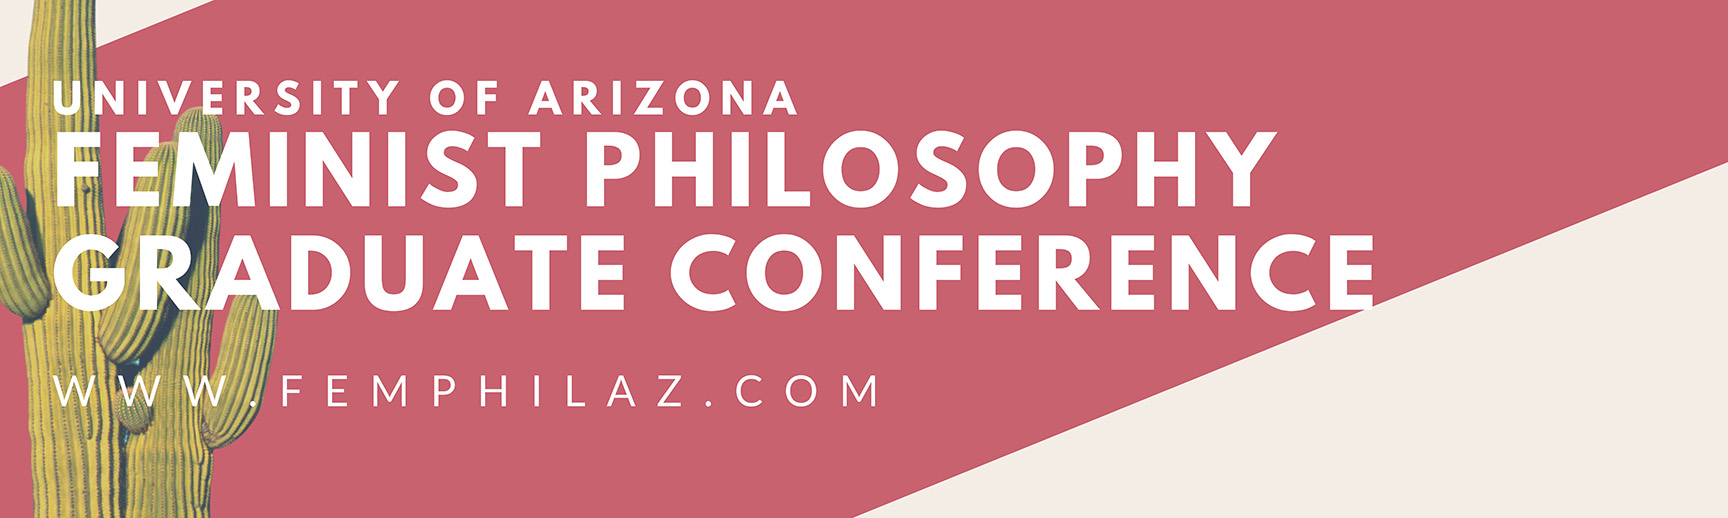 University of Arizona Feminist Philosophy Graduate Conference